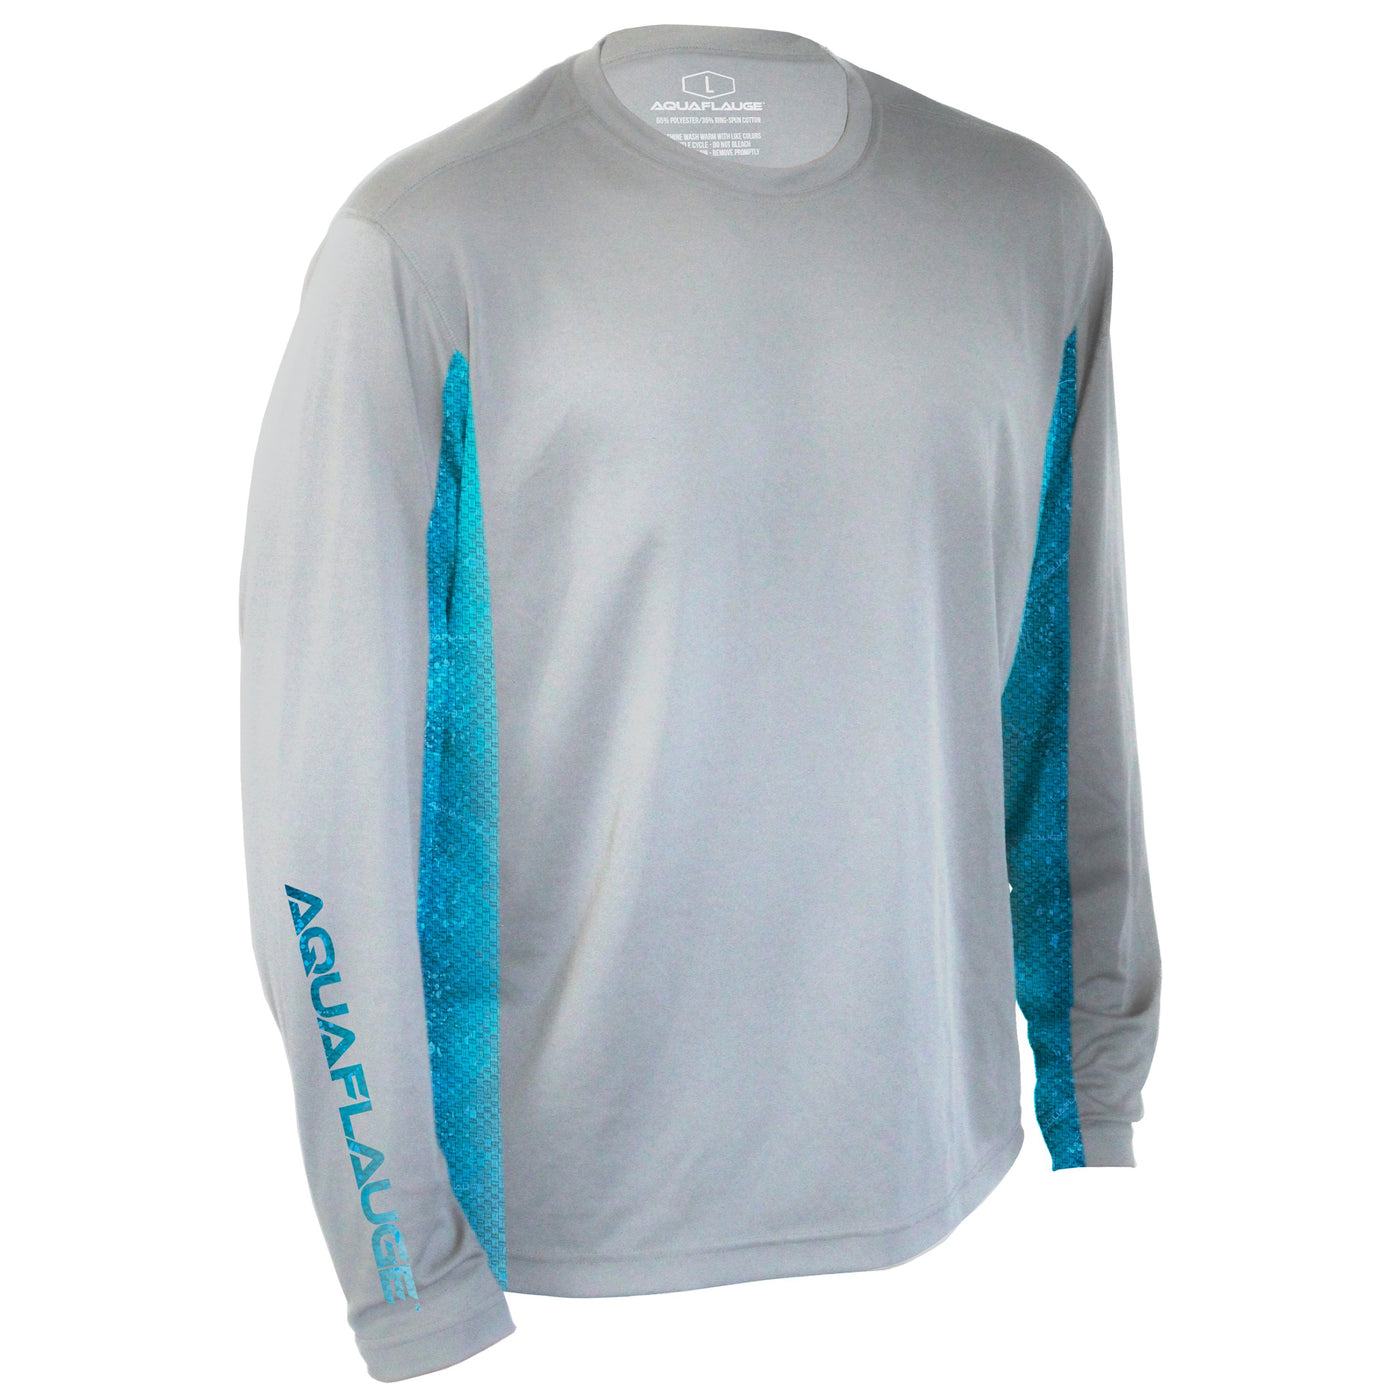 Pearl Grey Long Sleeve Performance Shirt with Blue Dorado Mesh - Men's